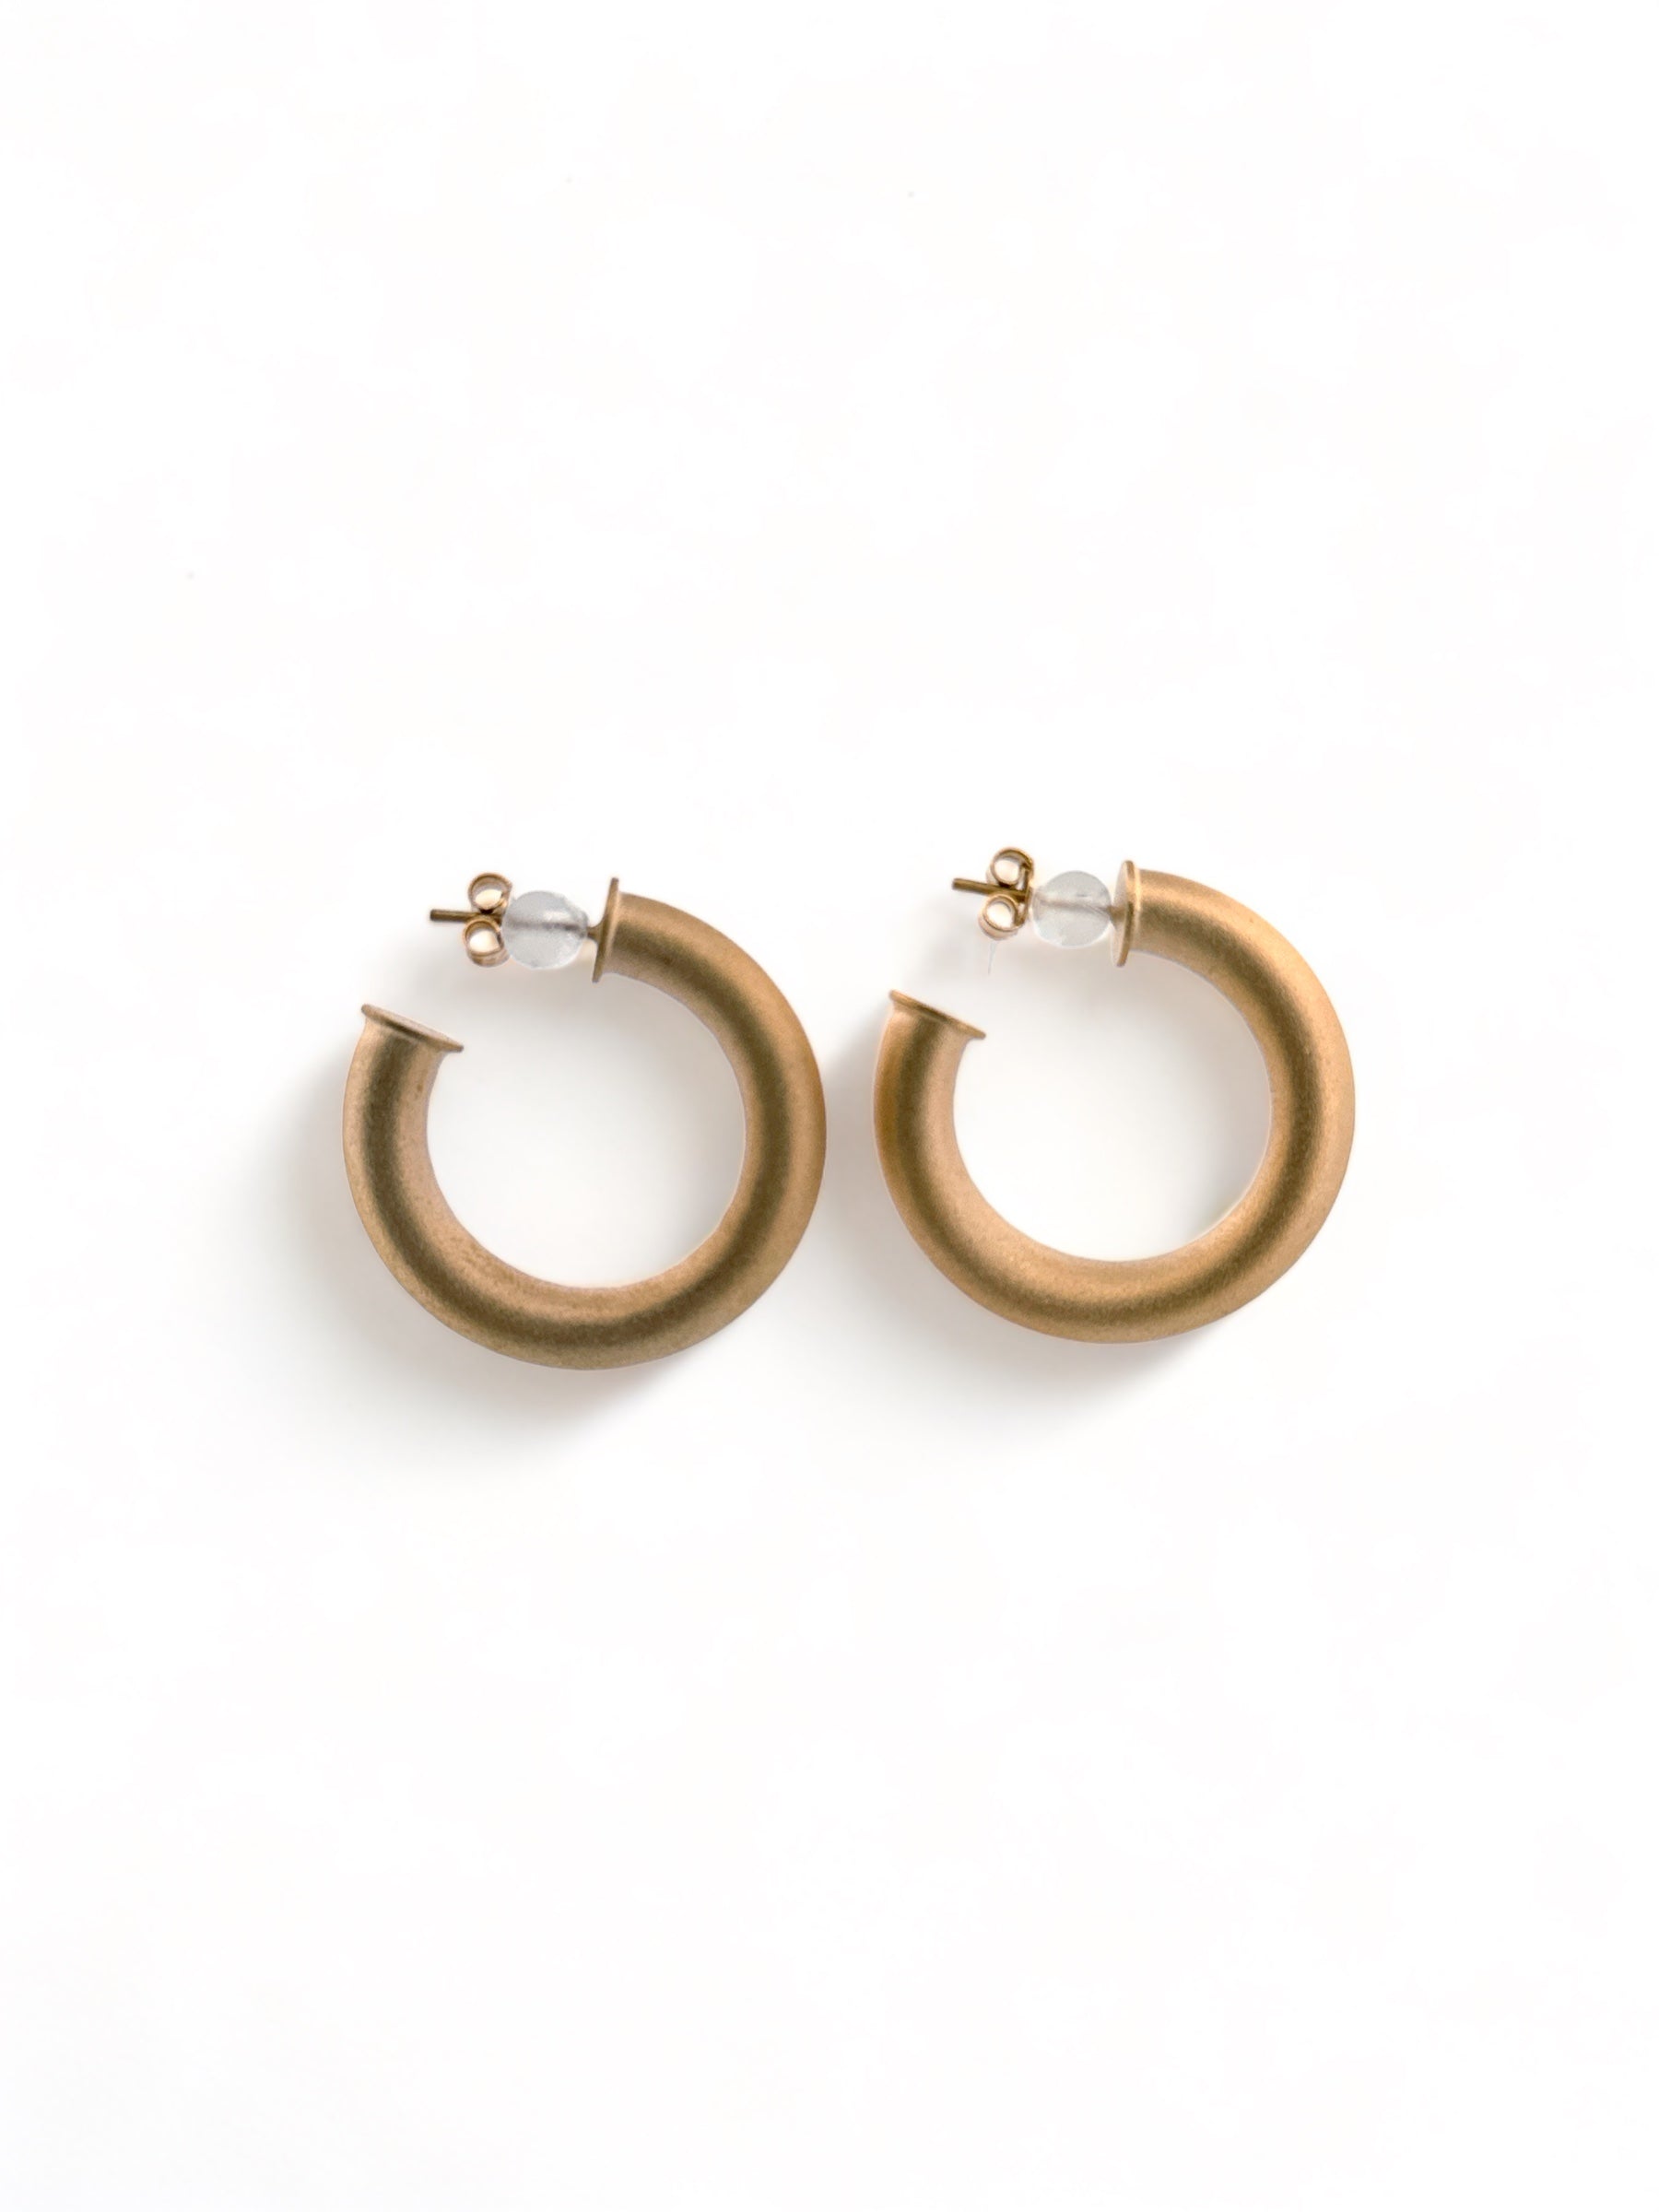 Old money aesthetic earrings hoops gold, opaque earrings